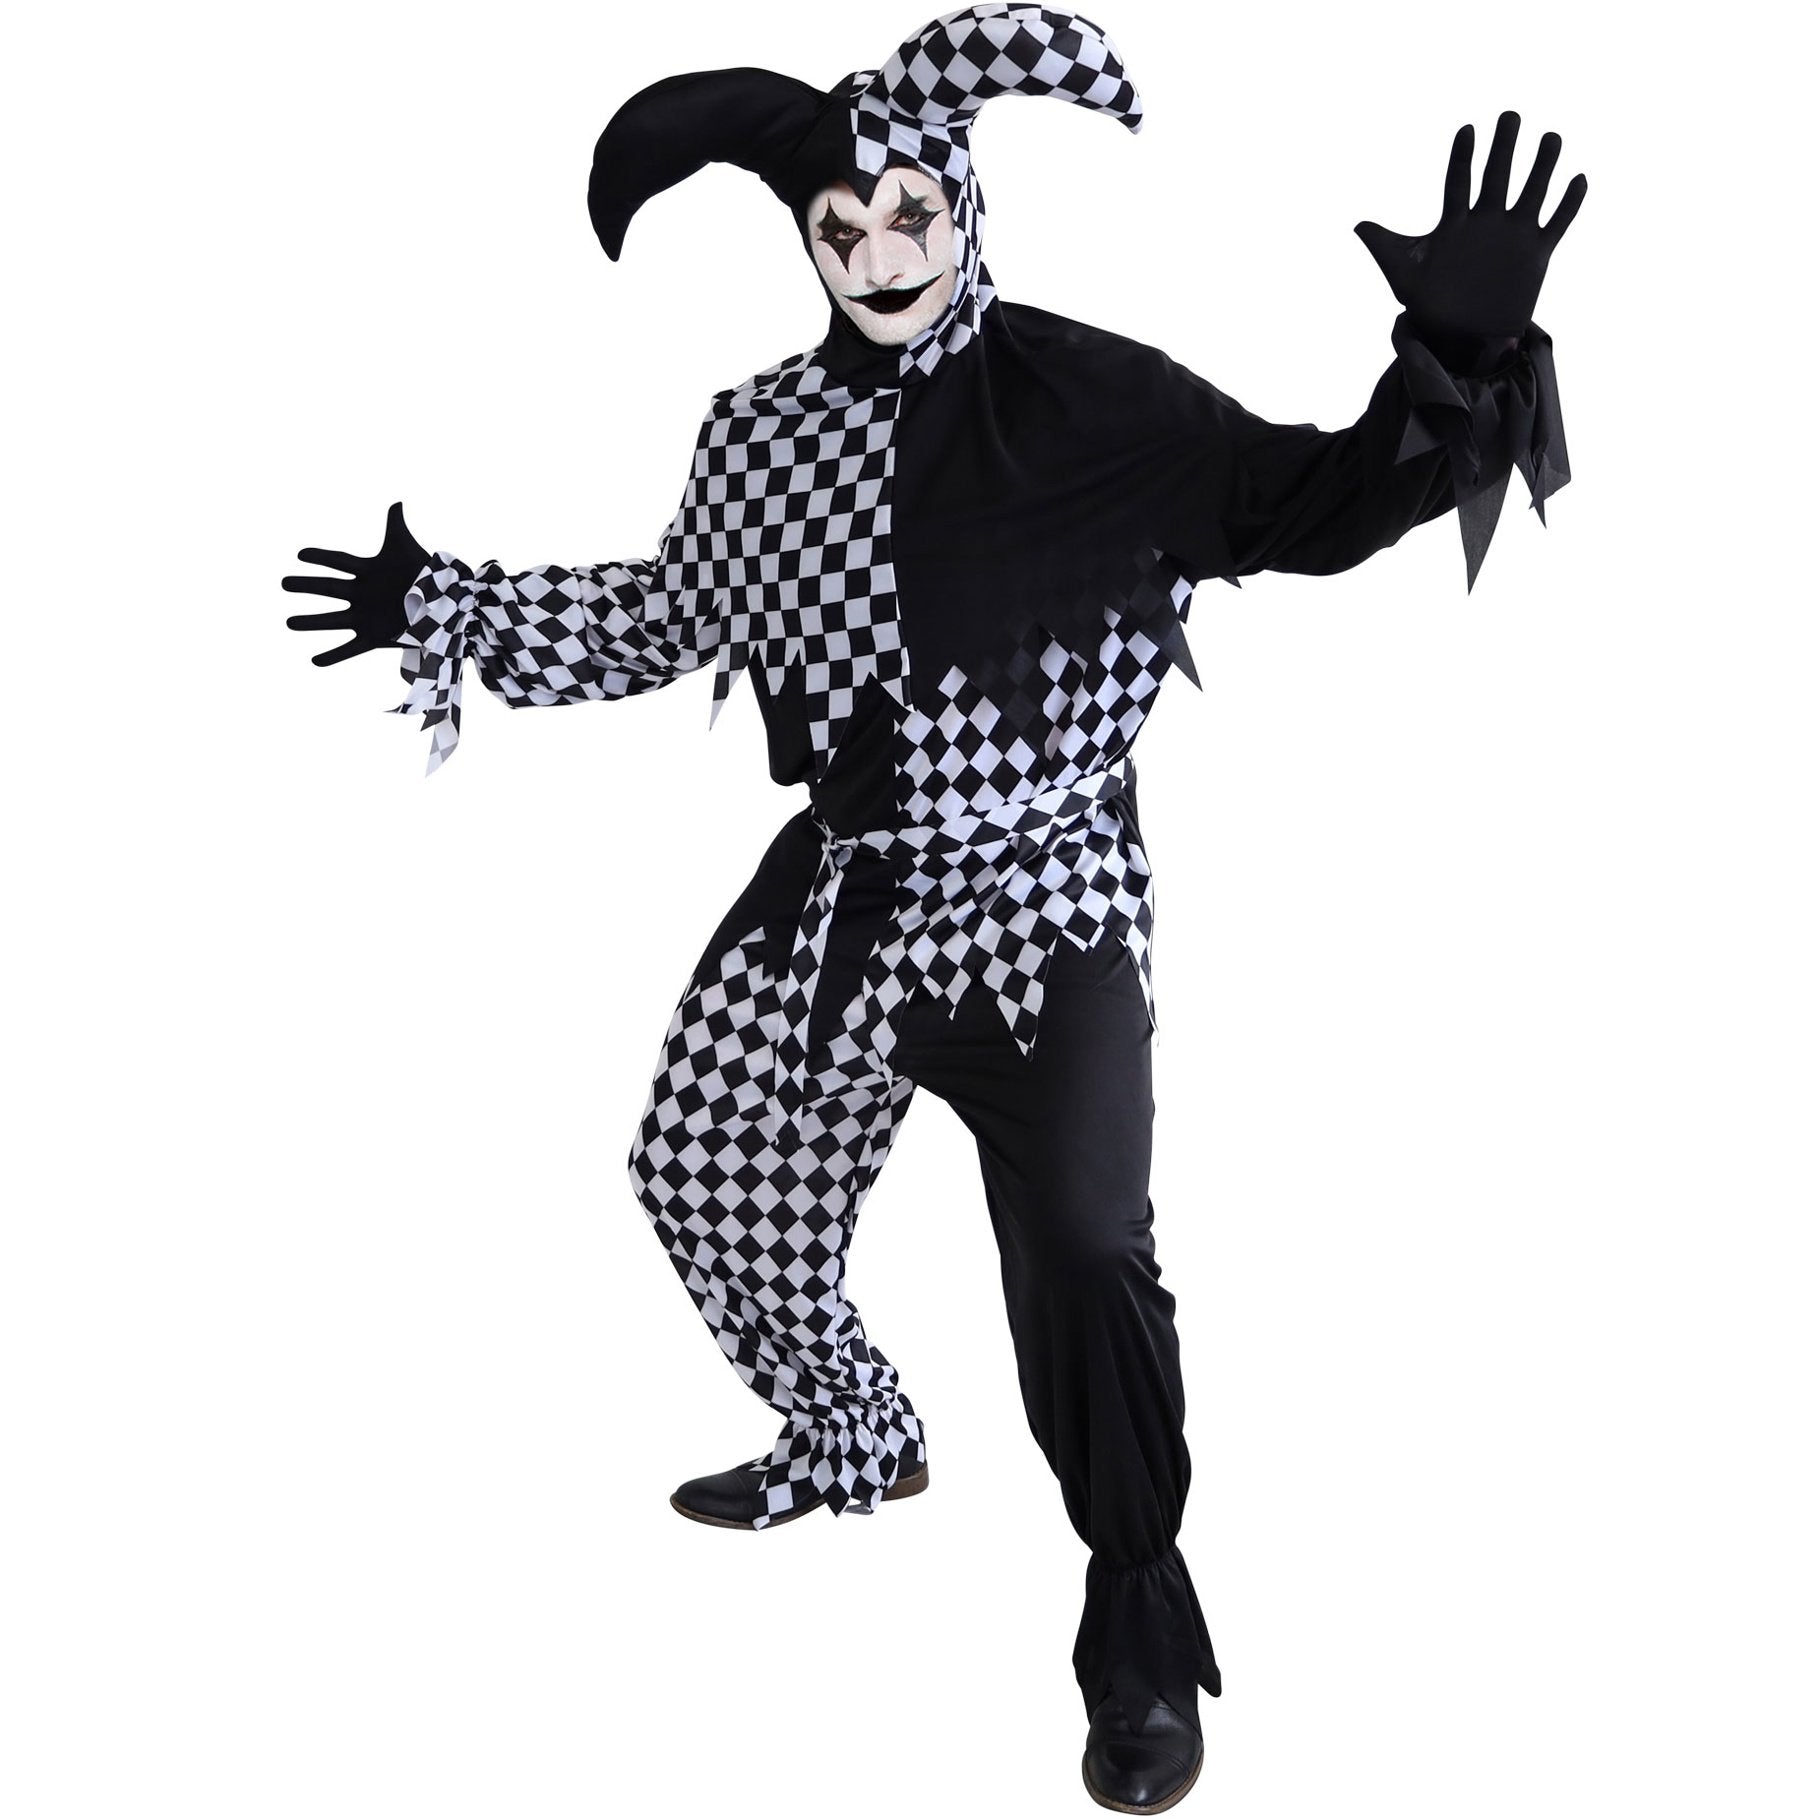 Costume Adult Jester Black & White Harlequin Large